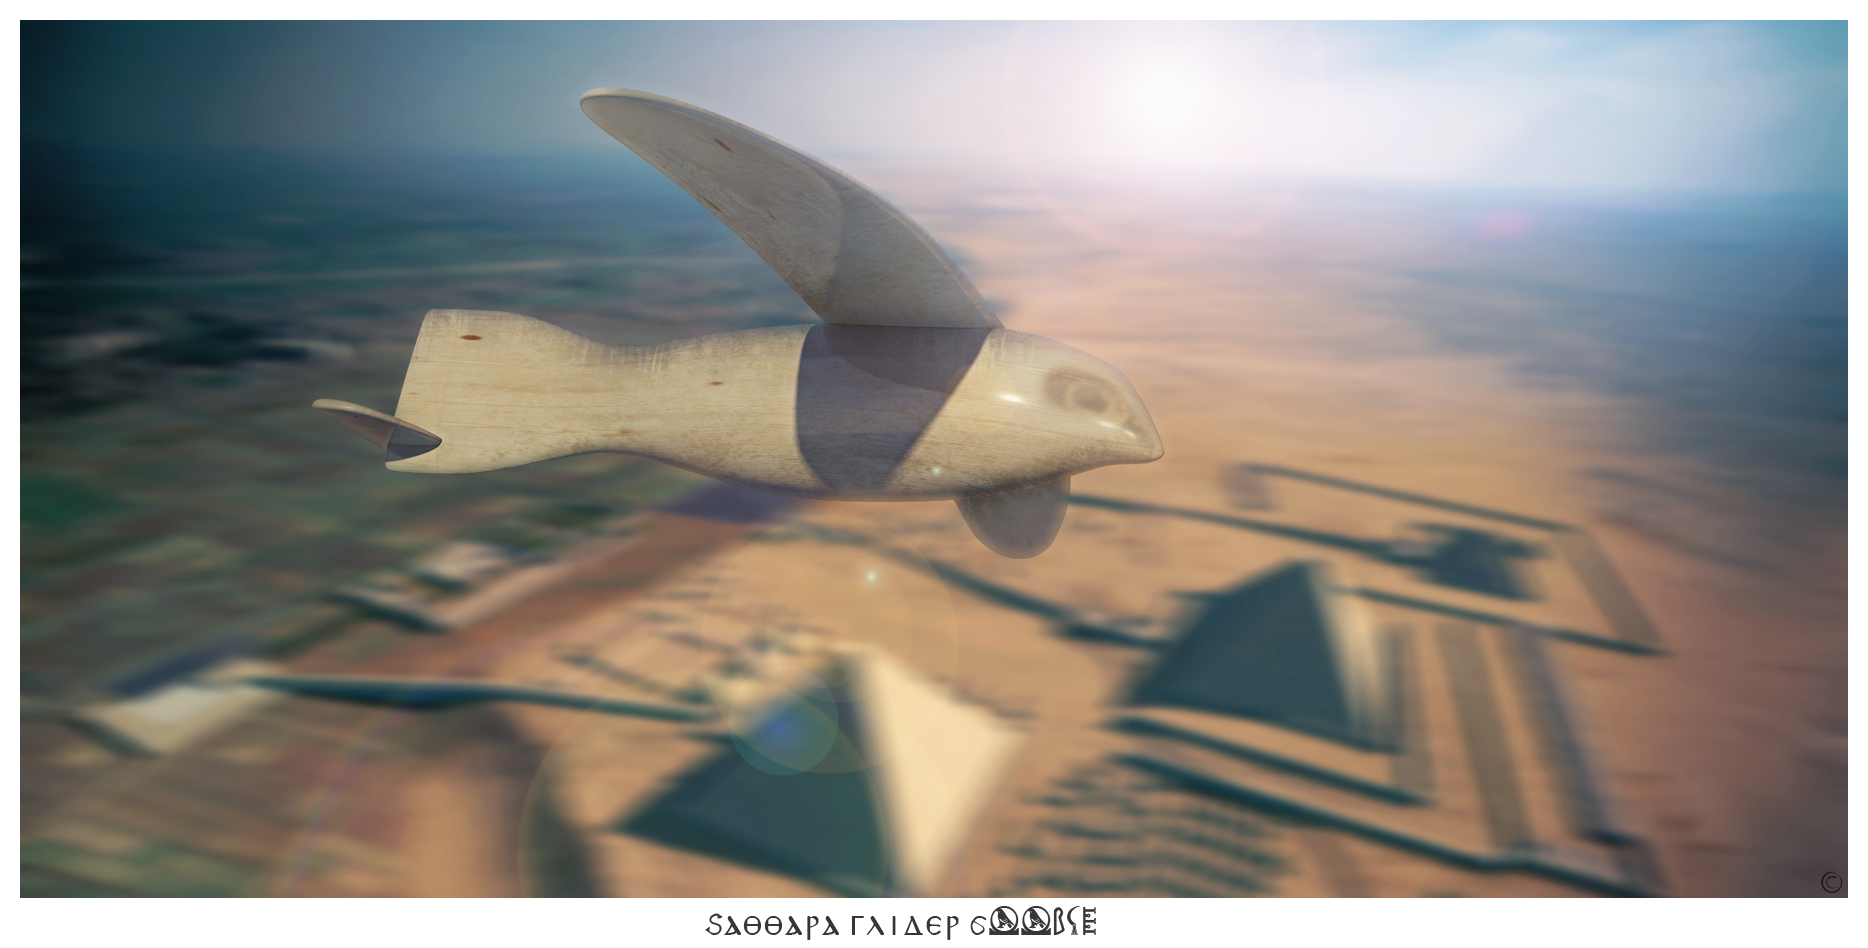 Saqqara bird an egyptian antic glider